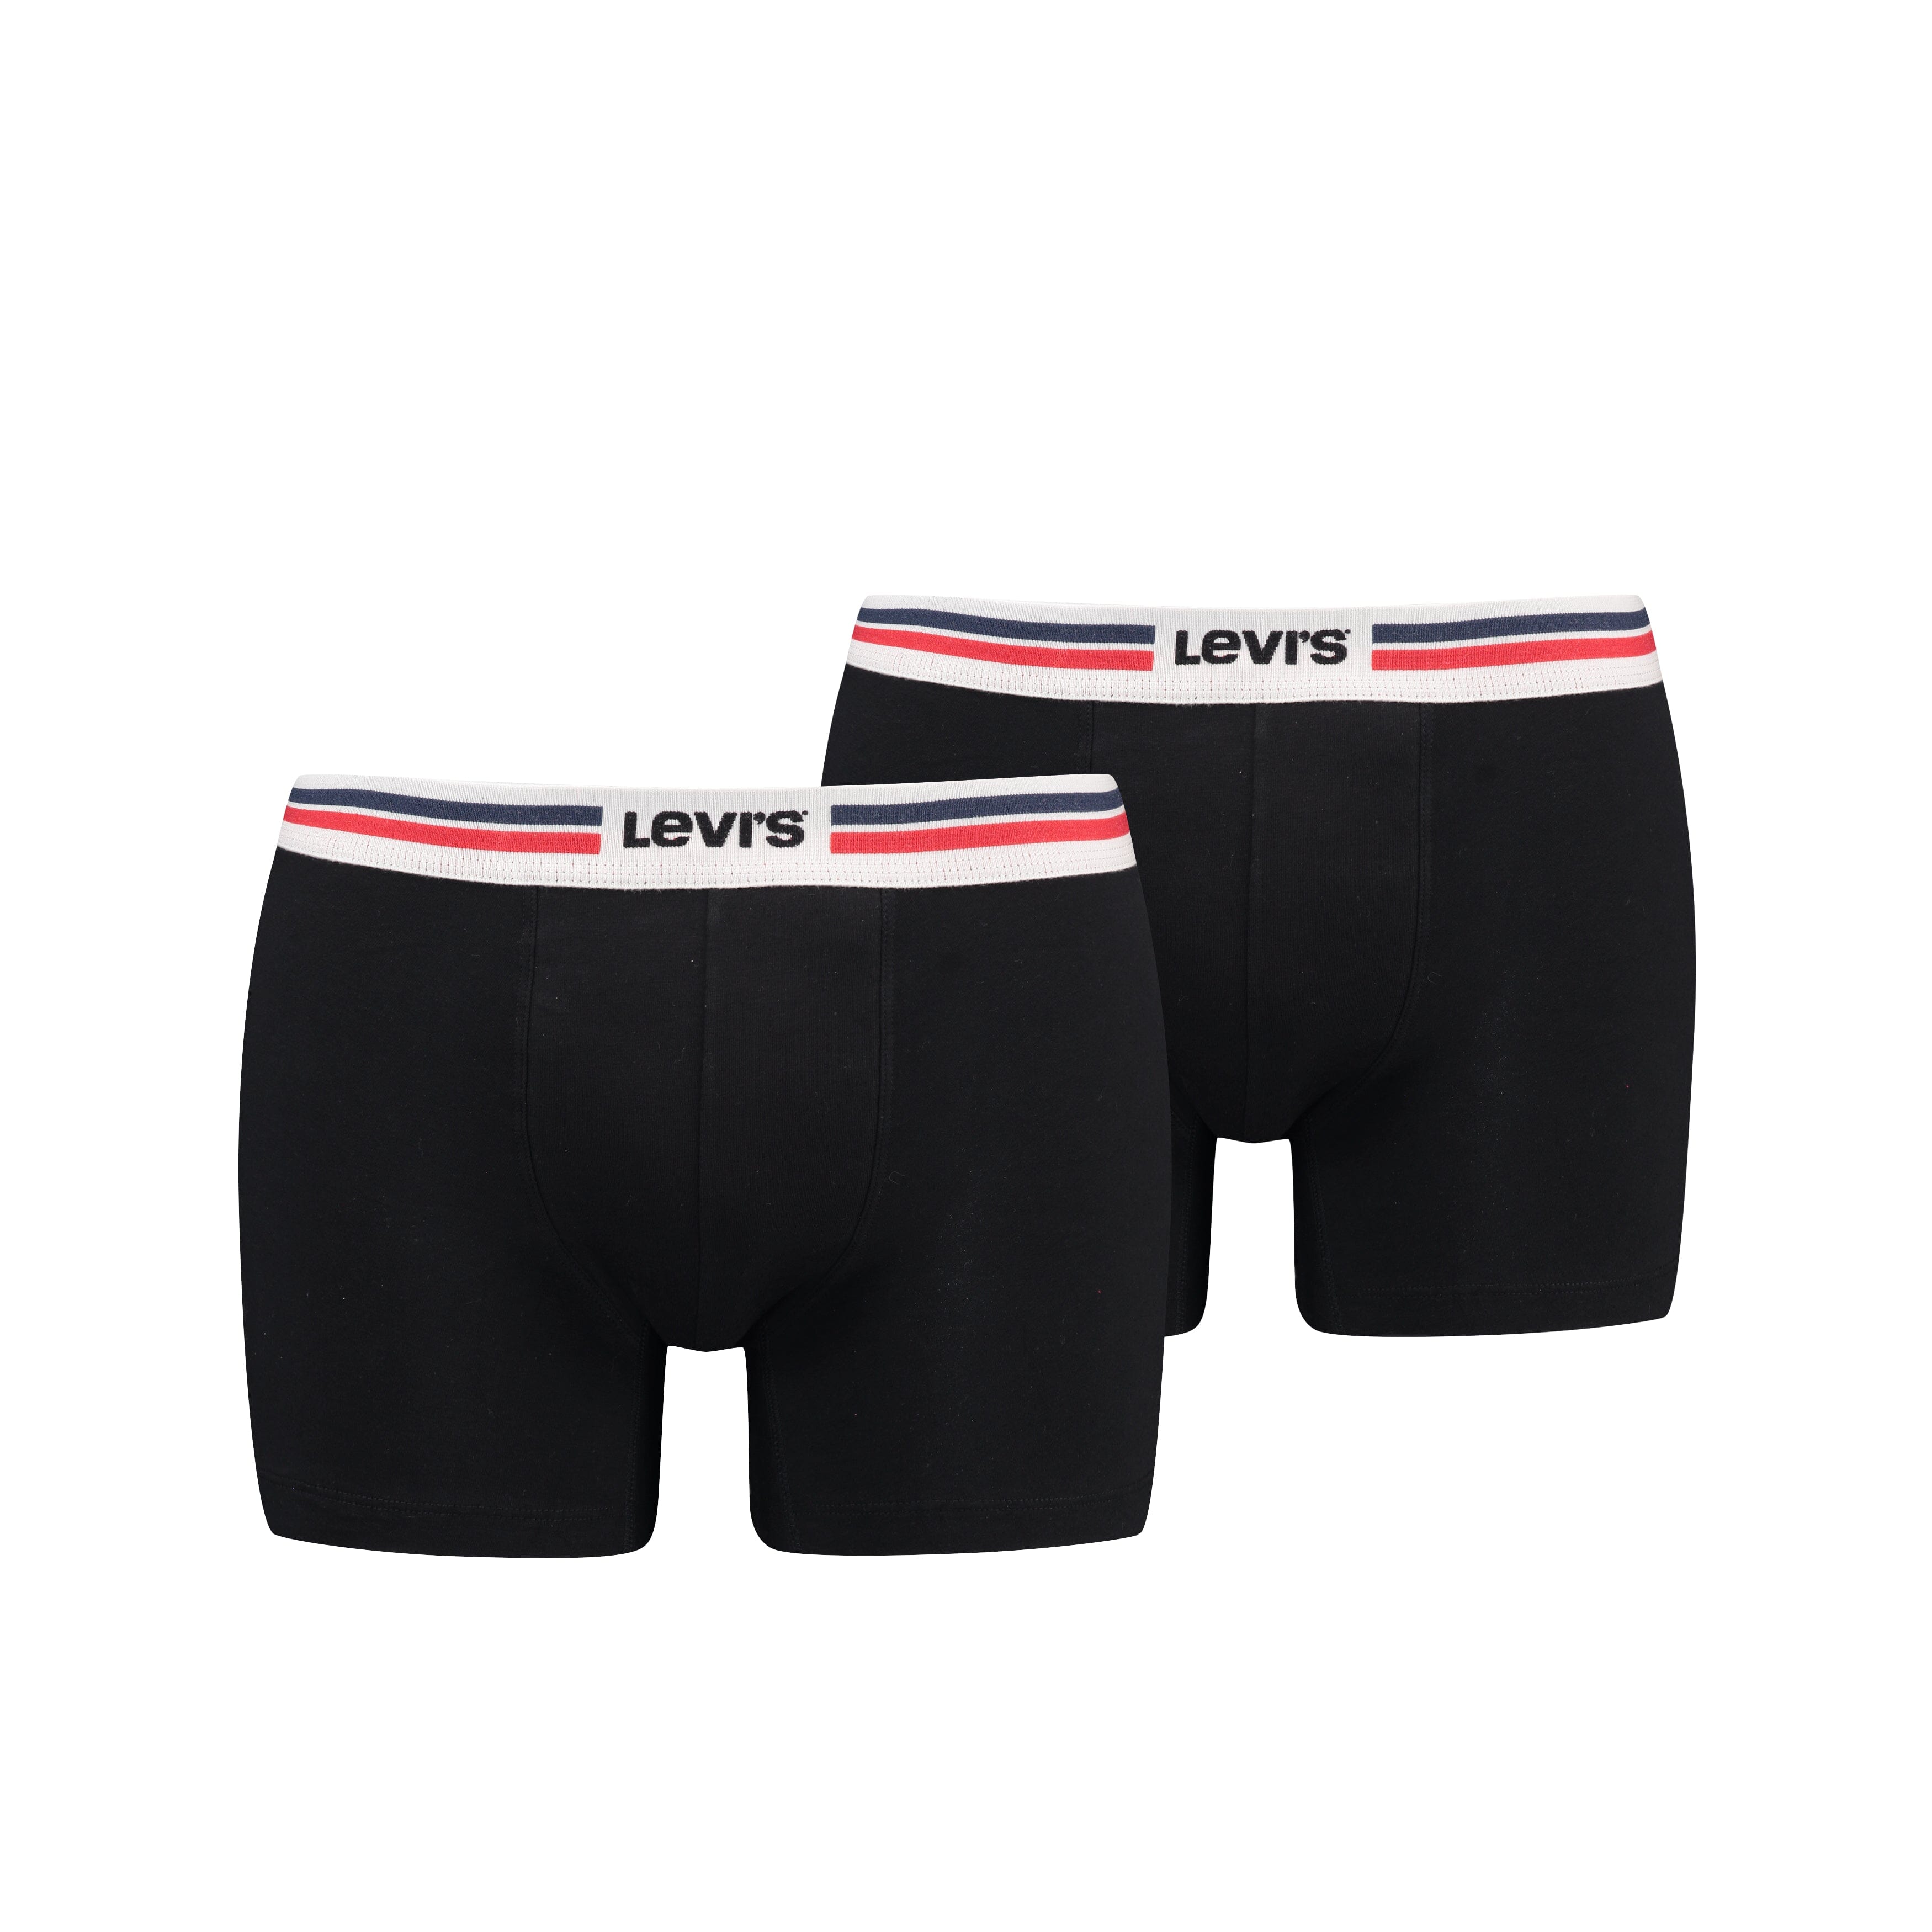 Levi's - Placed Sportswear Logo Boxer 2-pack - 701222843 - 001 Black Boxershort Levis 